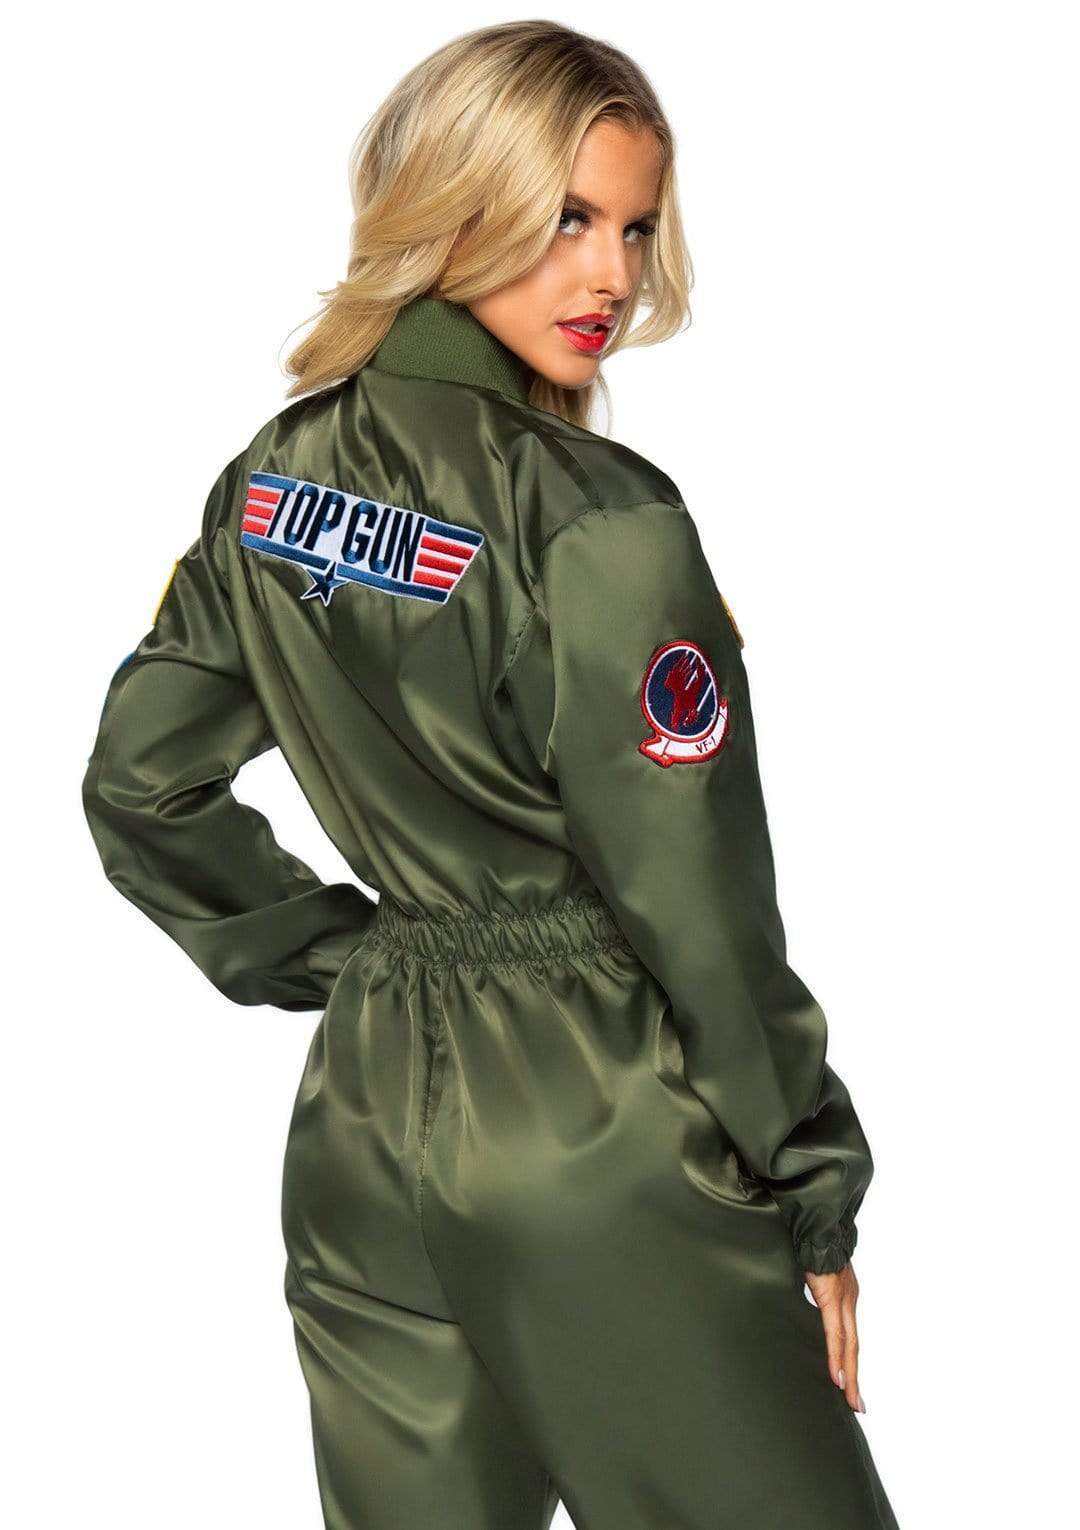 Women's Top Gun Parachute Flight Suit – Hurly-Burly